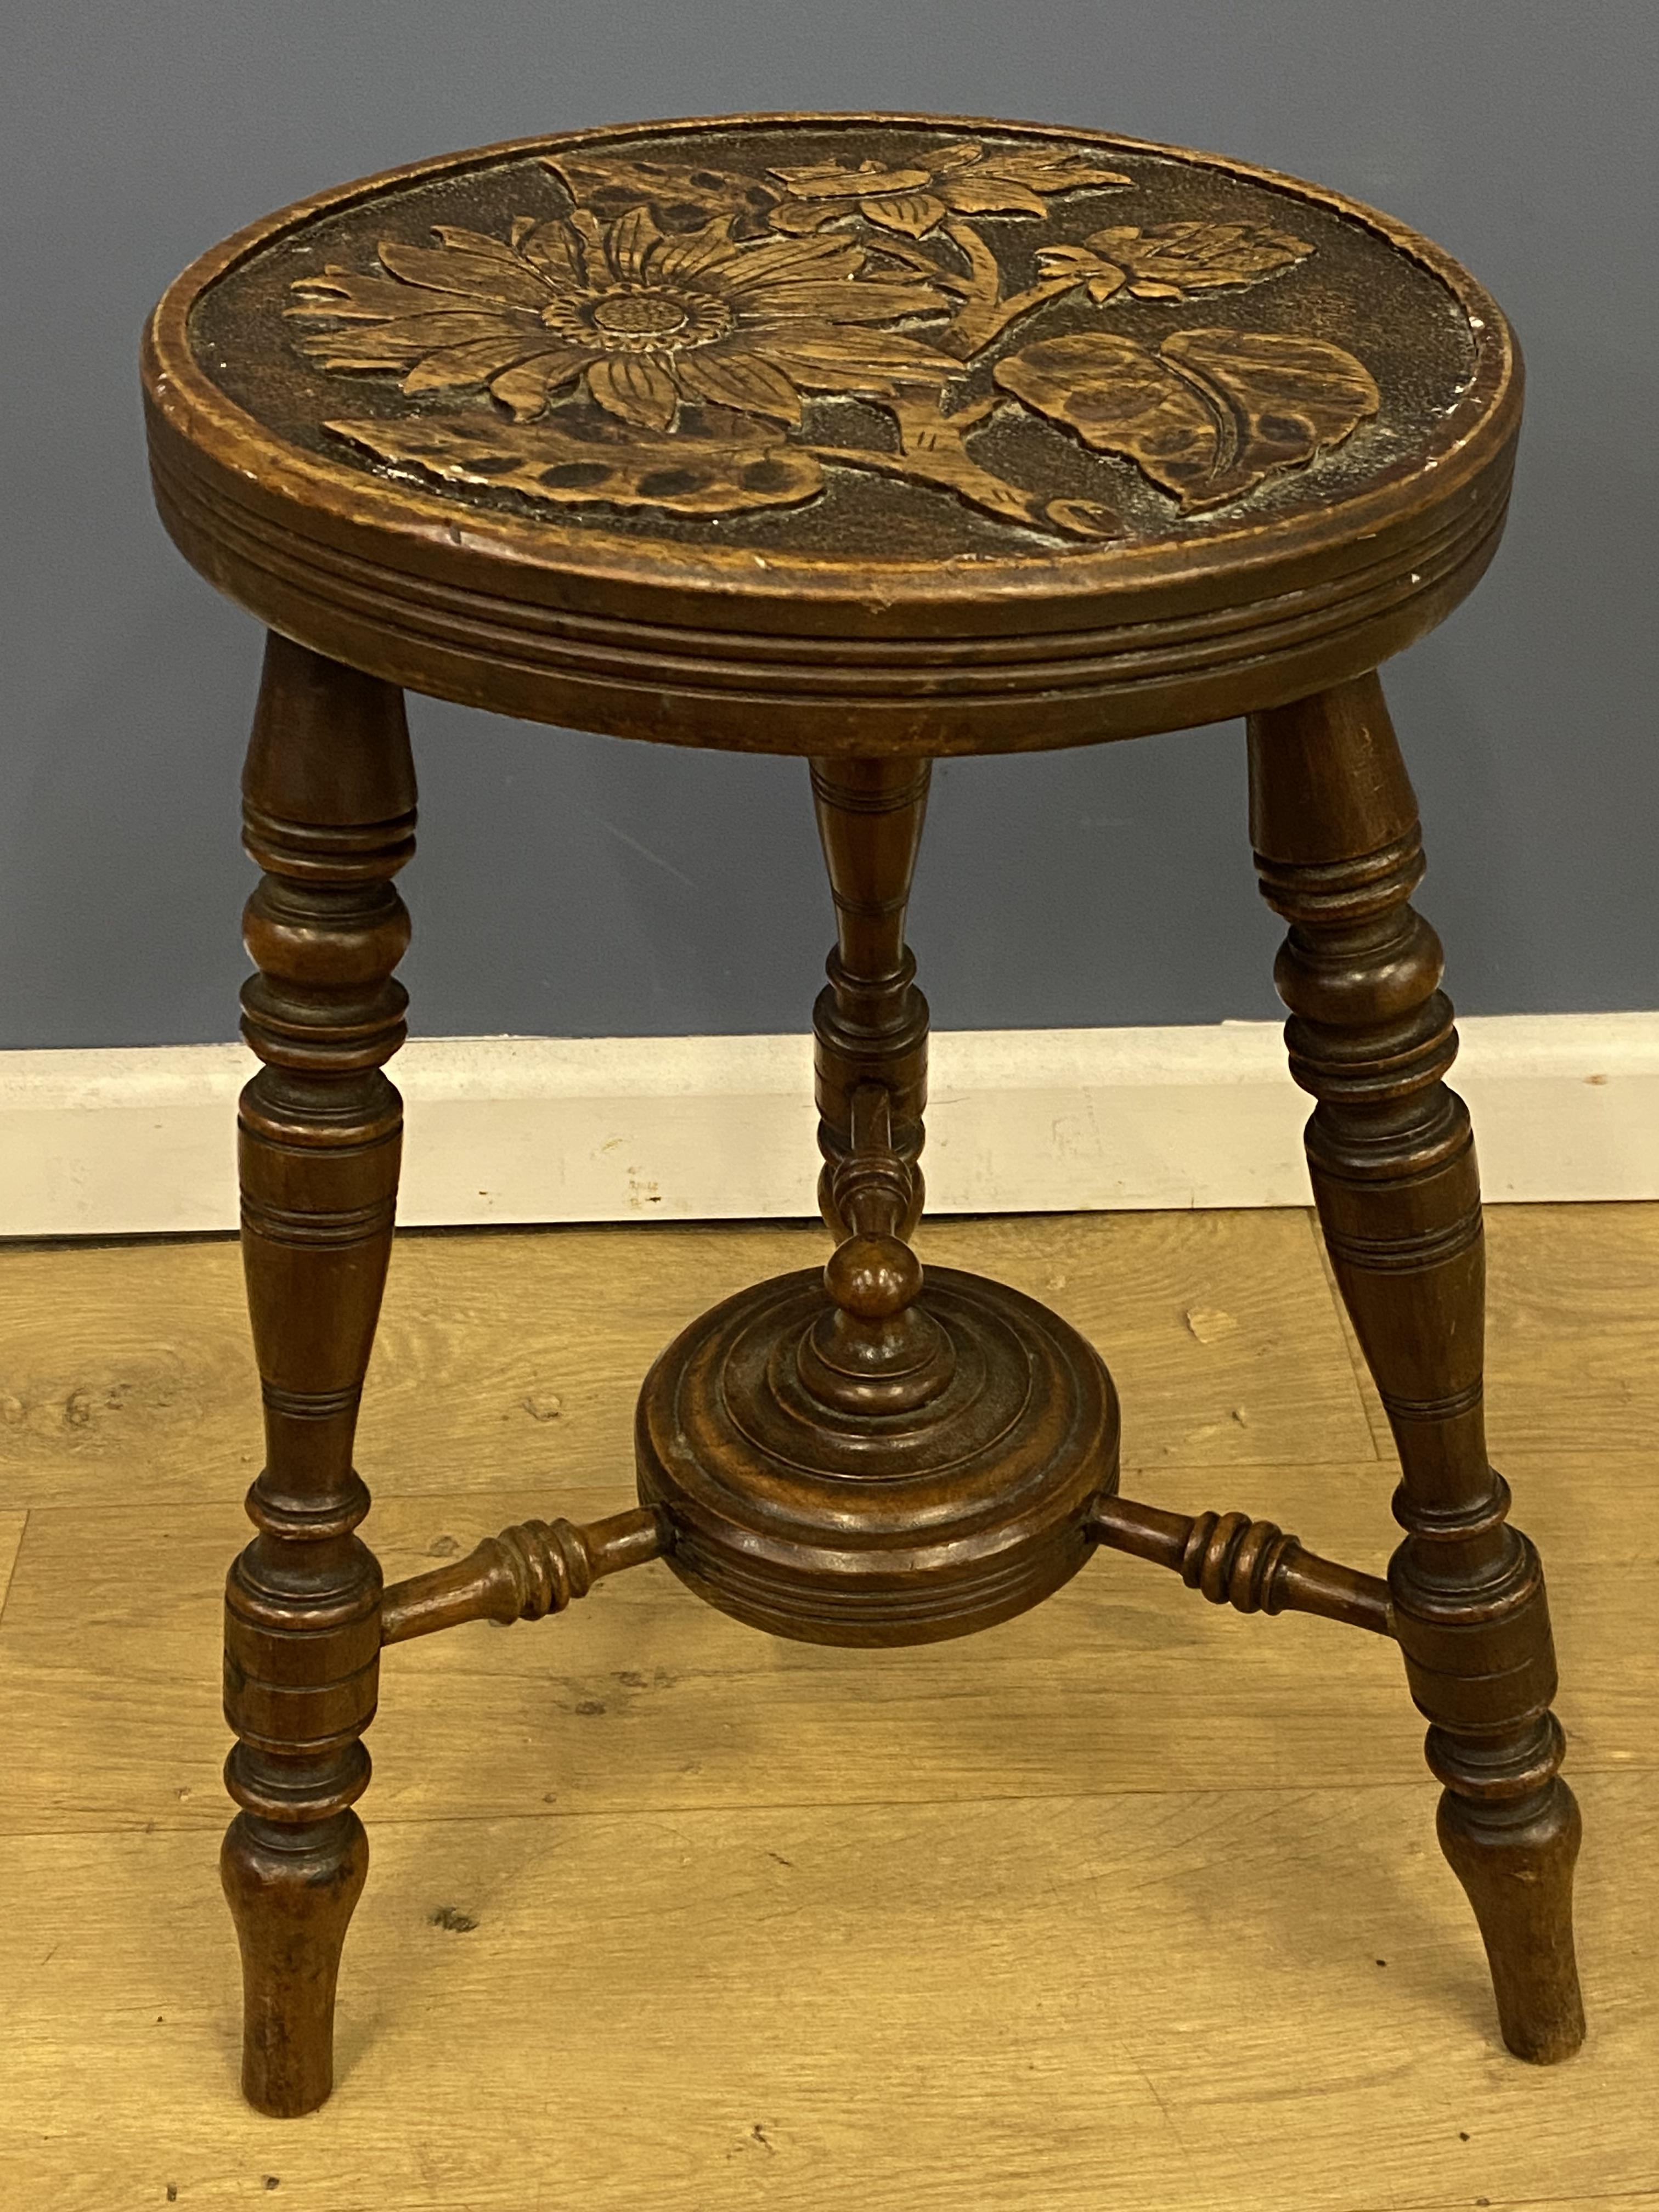 Carved Edwardian stool